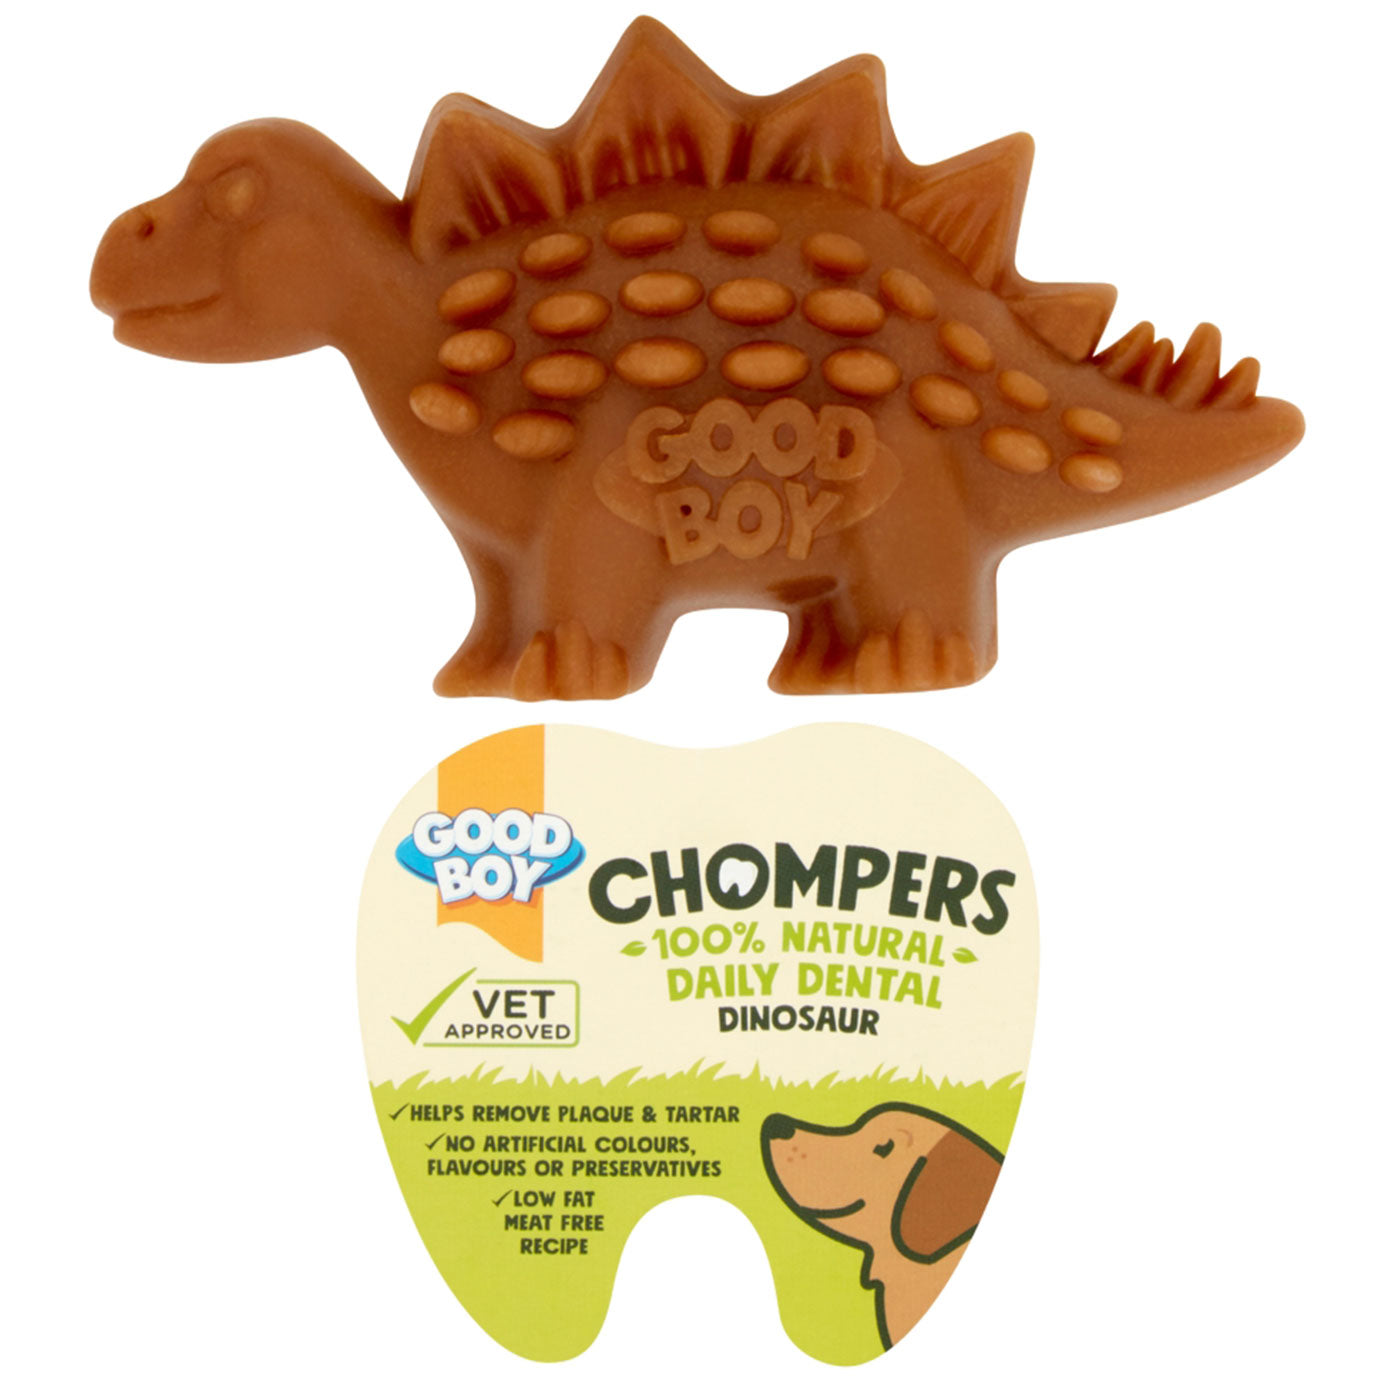 Good Boy Chompers Dental Dinosaur 65g